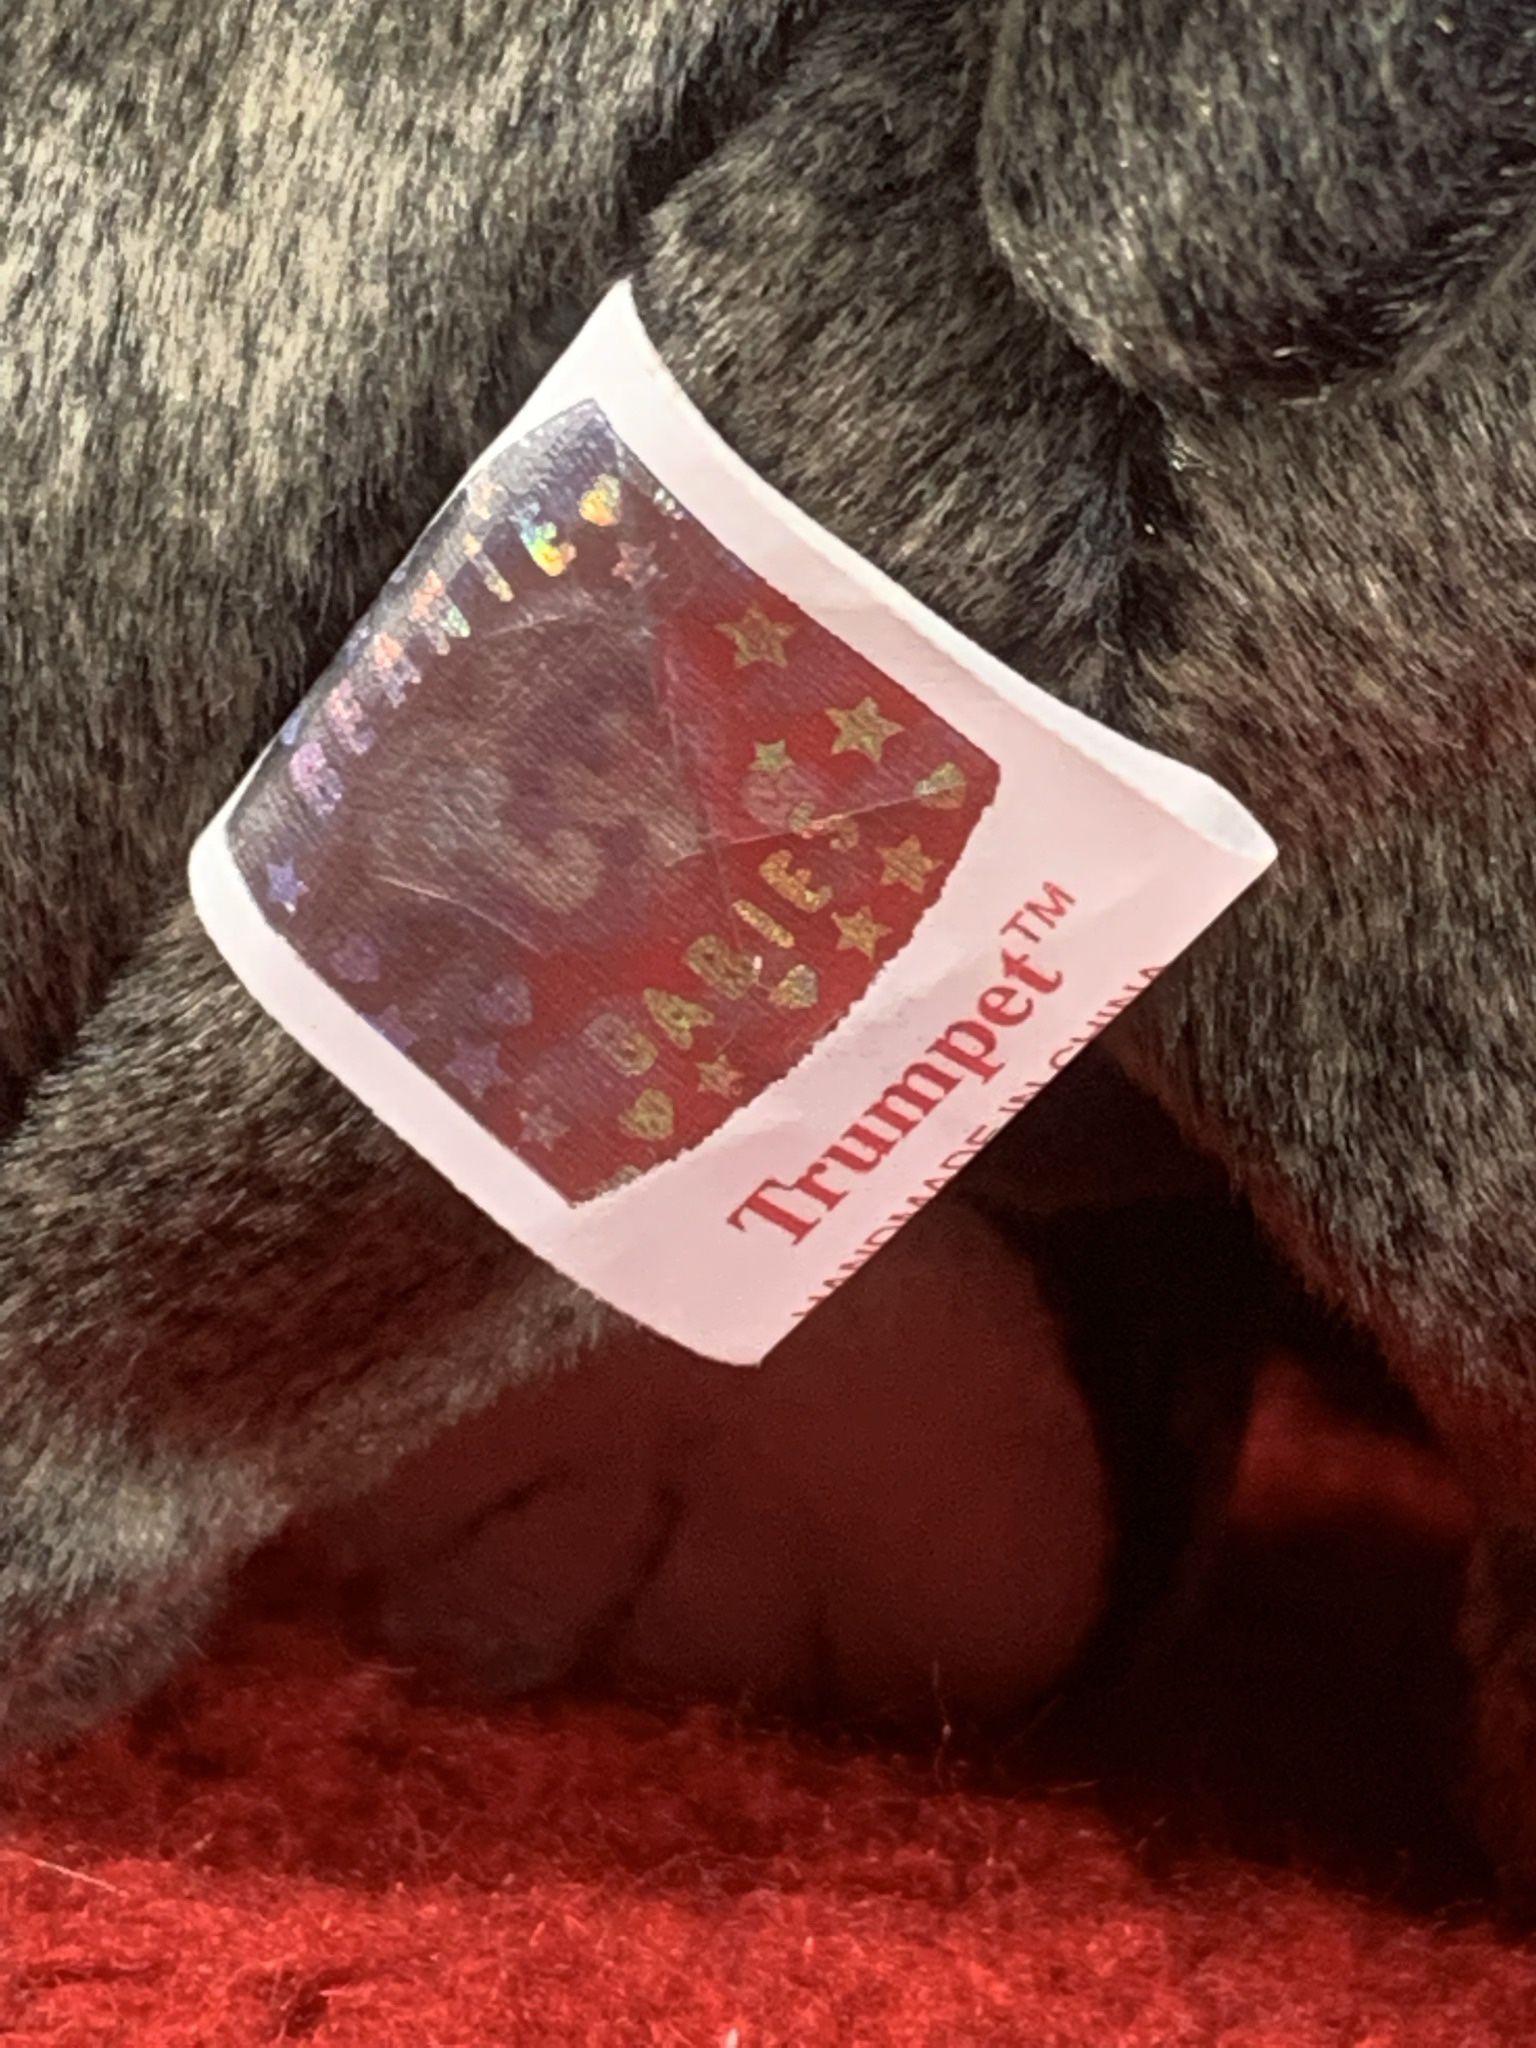 TY Beanie Baby - TRUMPET the Elephant (8.5 inch) - MWMTs Stuffed Animal Toy